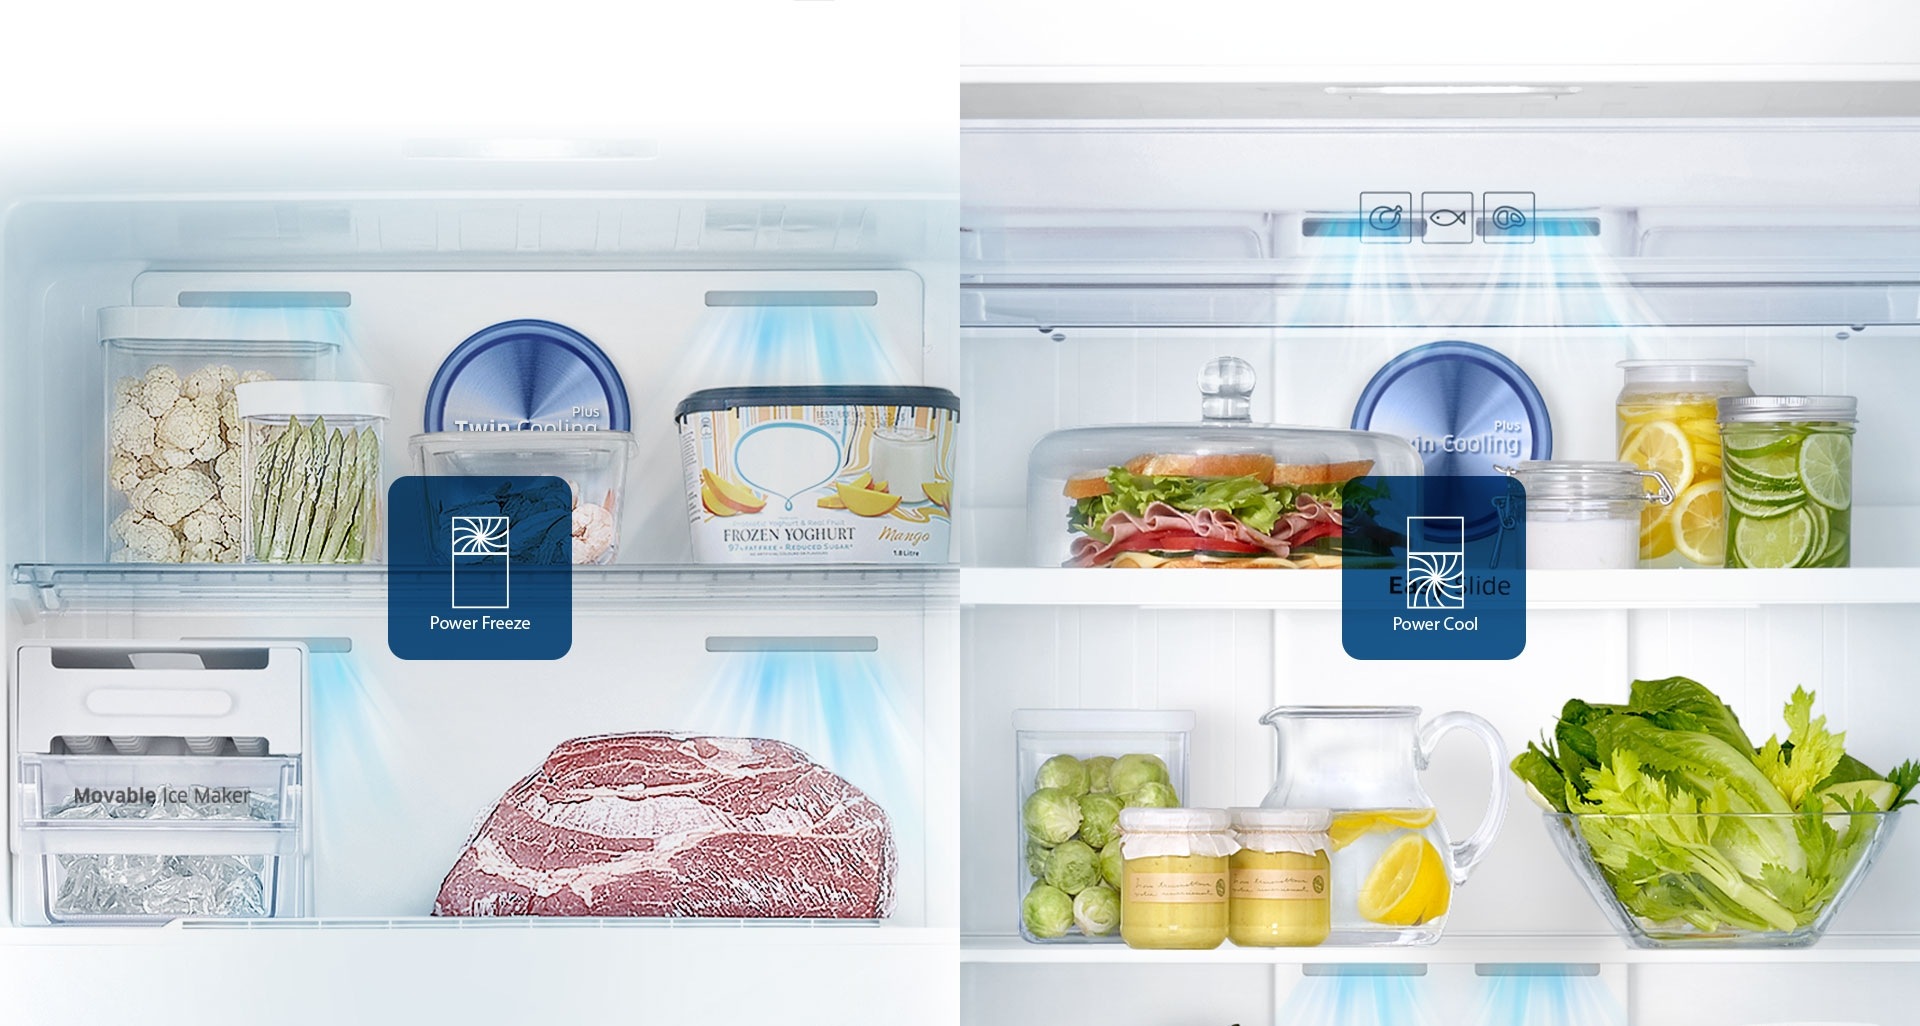 Samsung Top Freezer Refrigerator - Makes ice and chills drinks